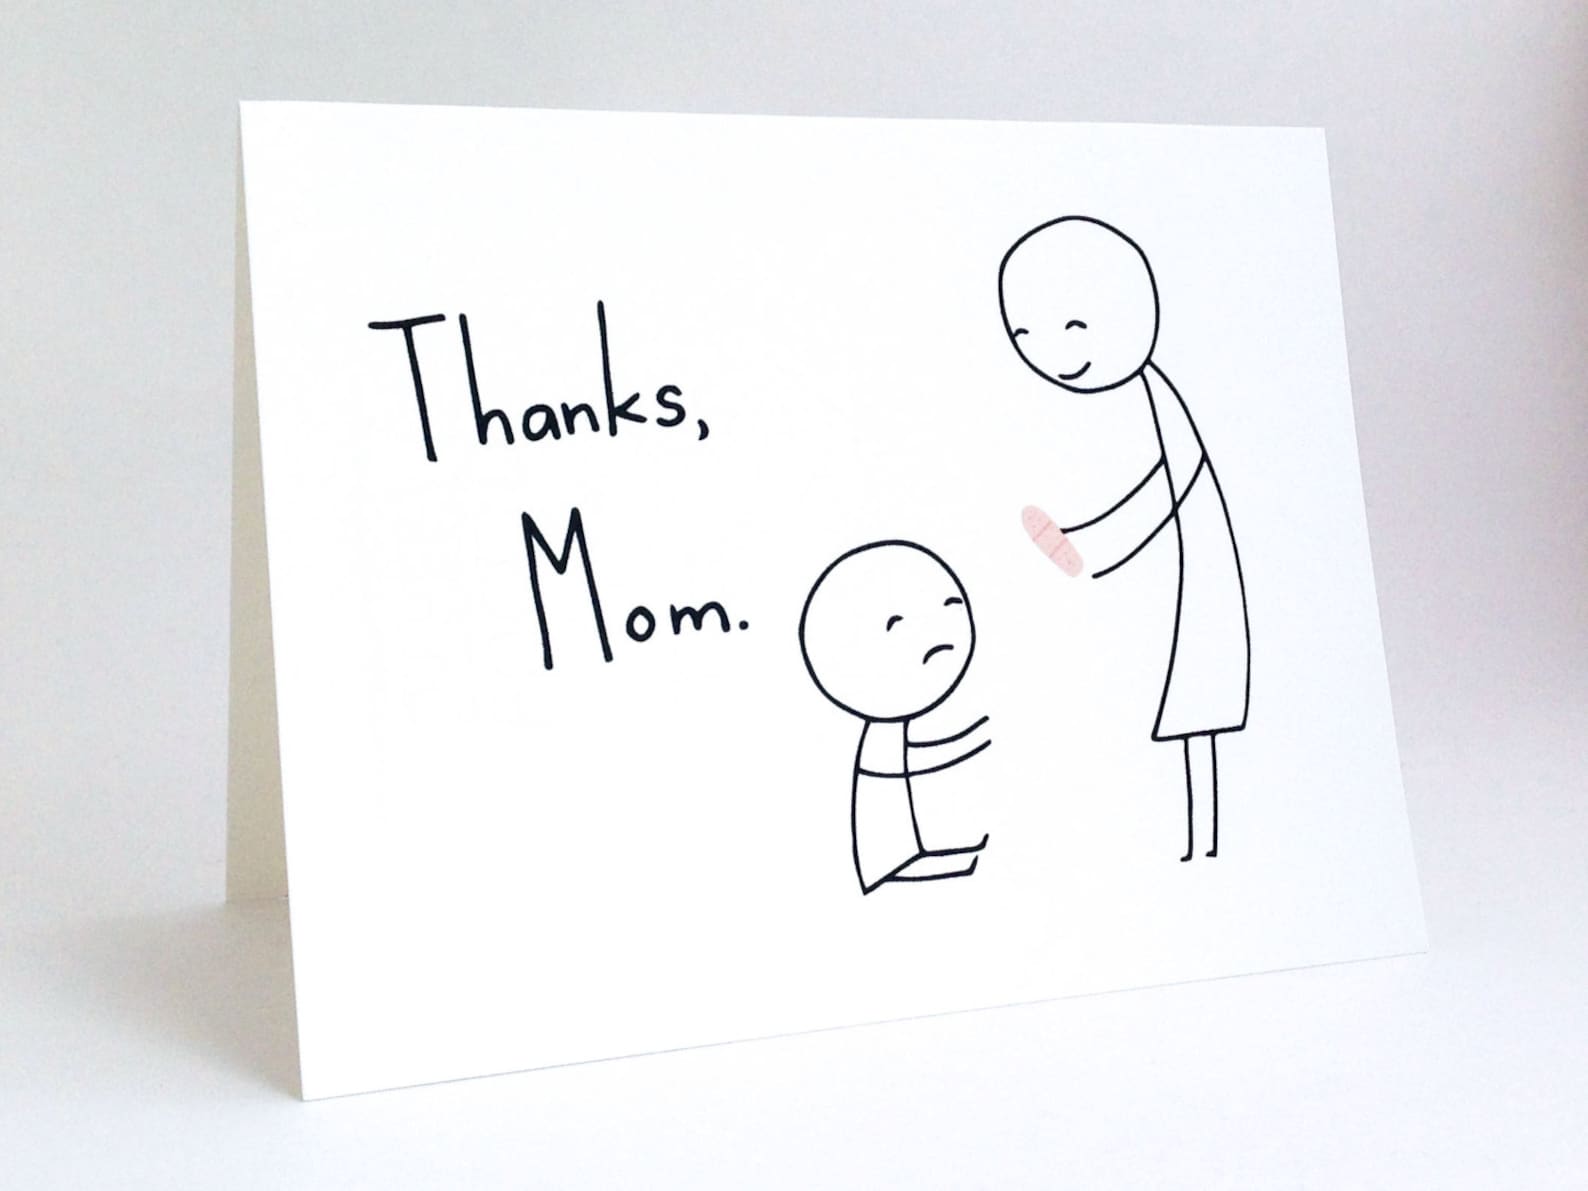 Thank mother. For mom открытка. Mothers Day прикольные открытки. Открытка thanks mom. День матери забавные скетчи.